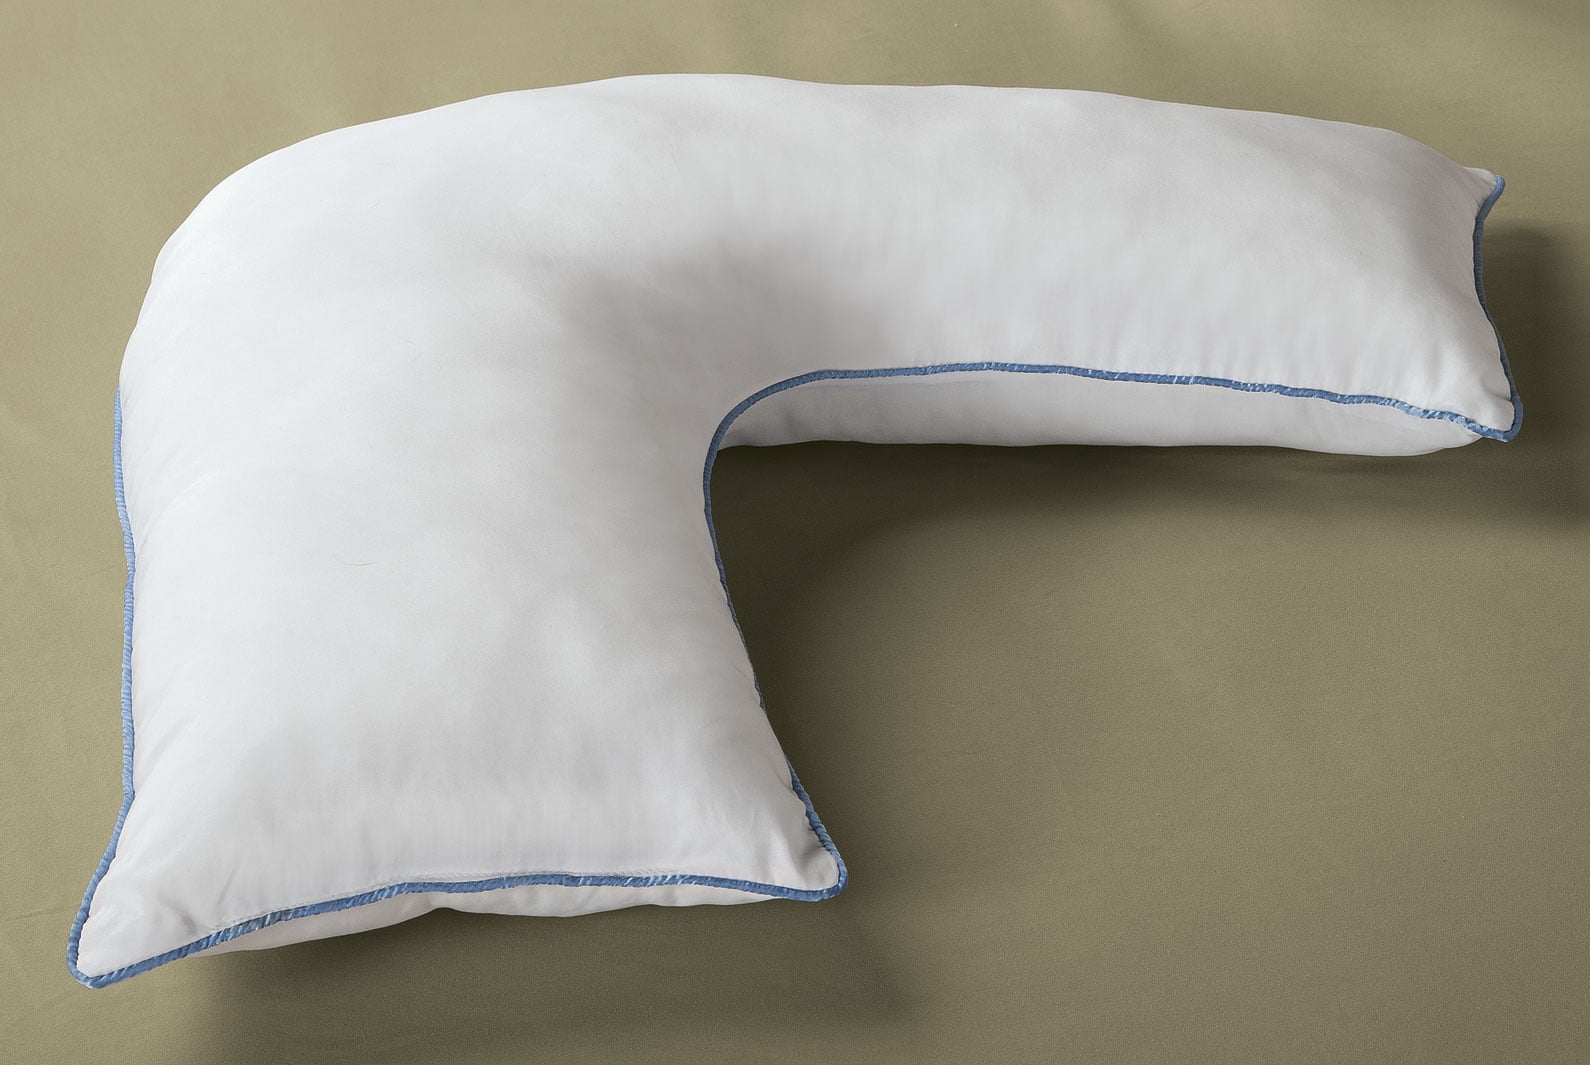 l shaped neck pillow